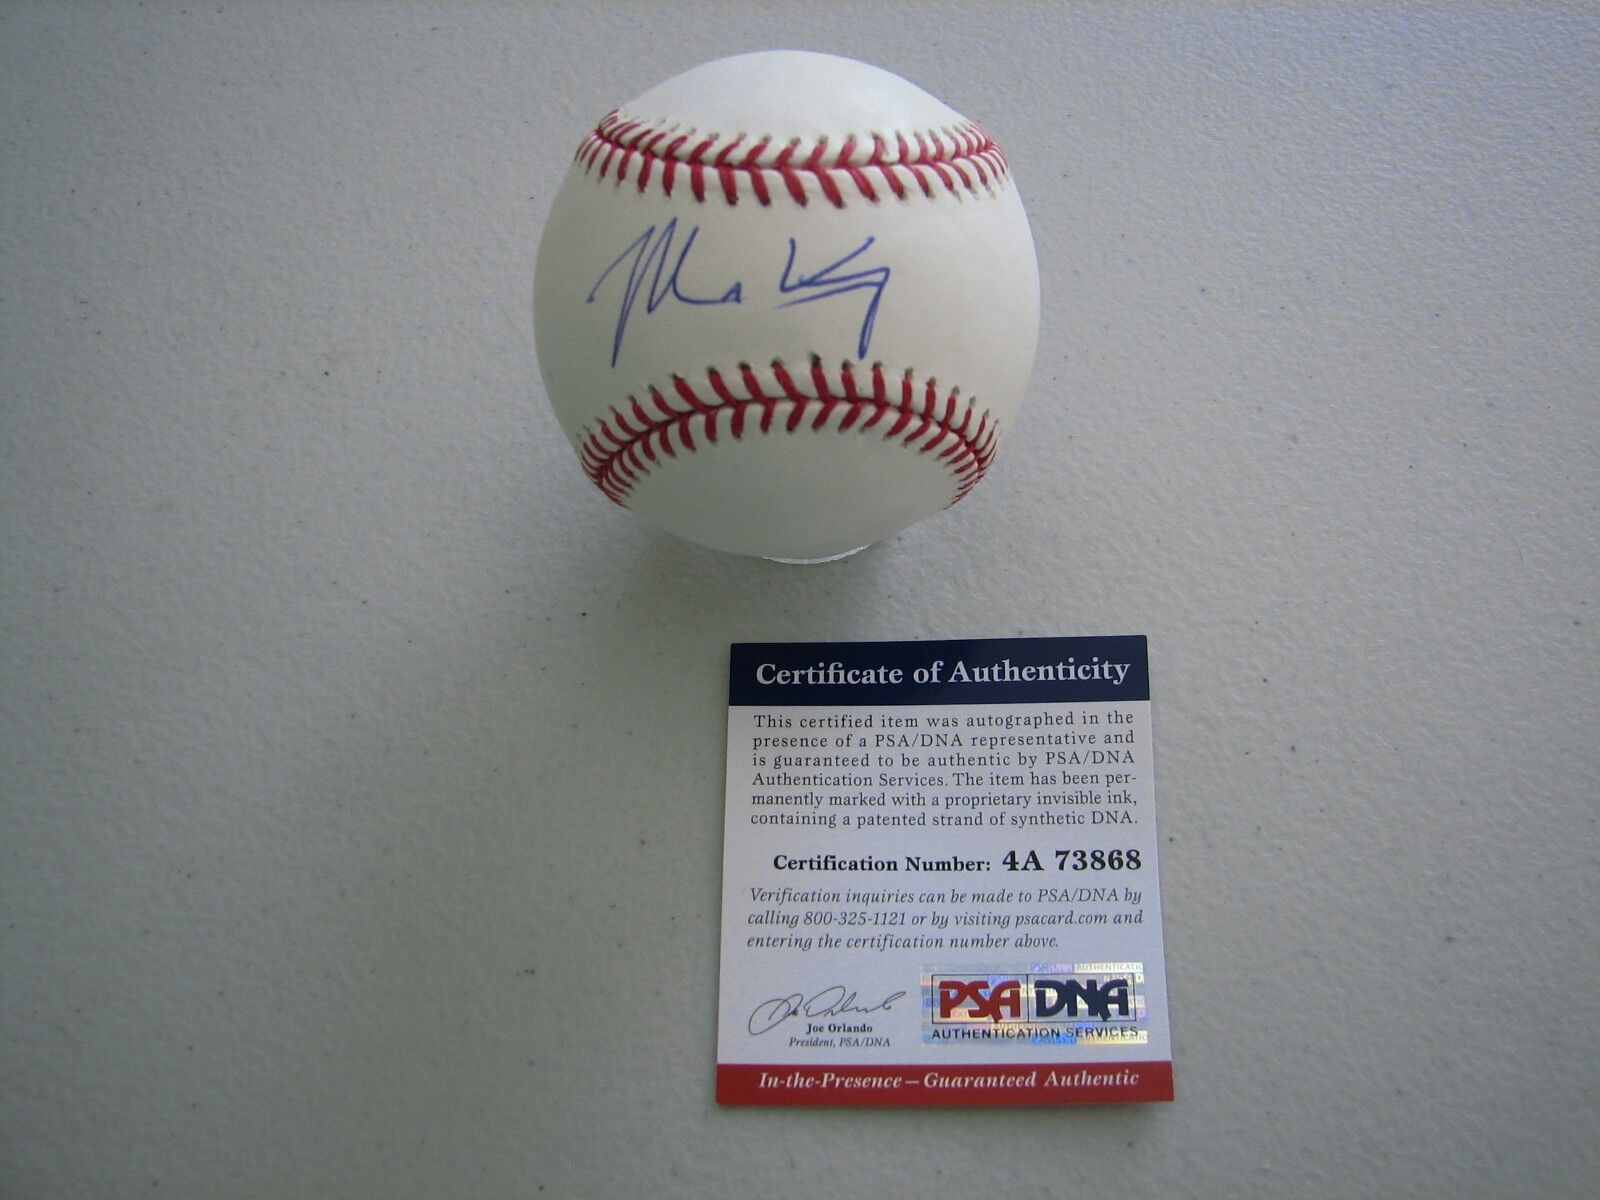  Matt Kemp Autographed Signed OML Baseball - PSA/DNA